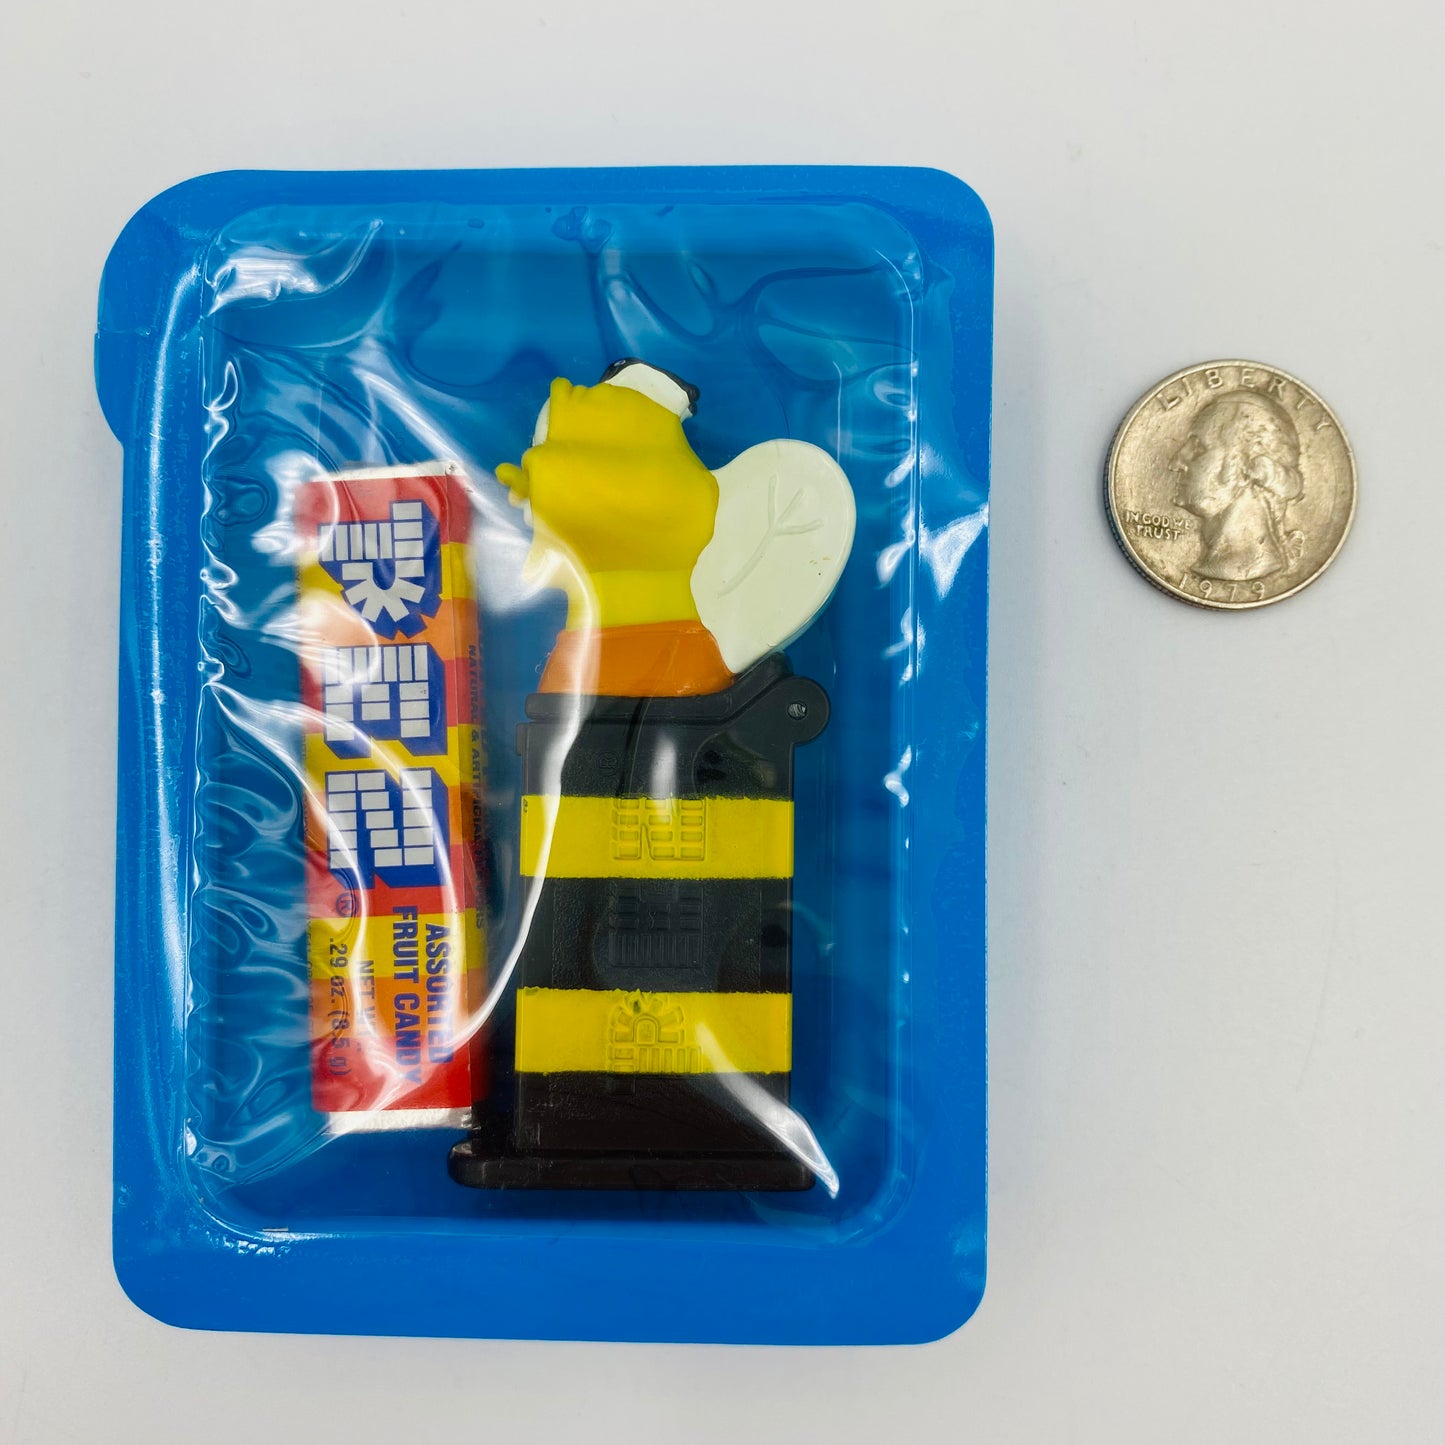 General Mills Honey Nut Cheerios Buzz the Bee mini PEZ dispenser (2001) packaged